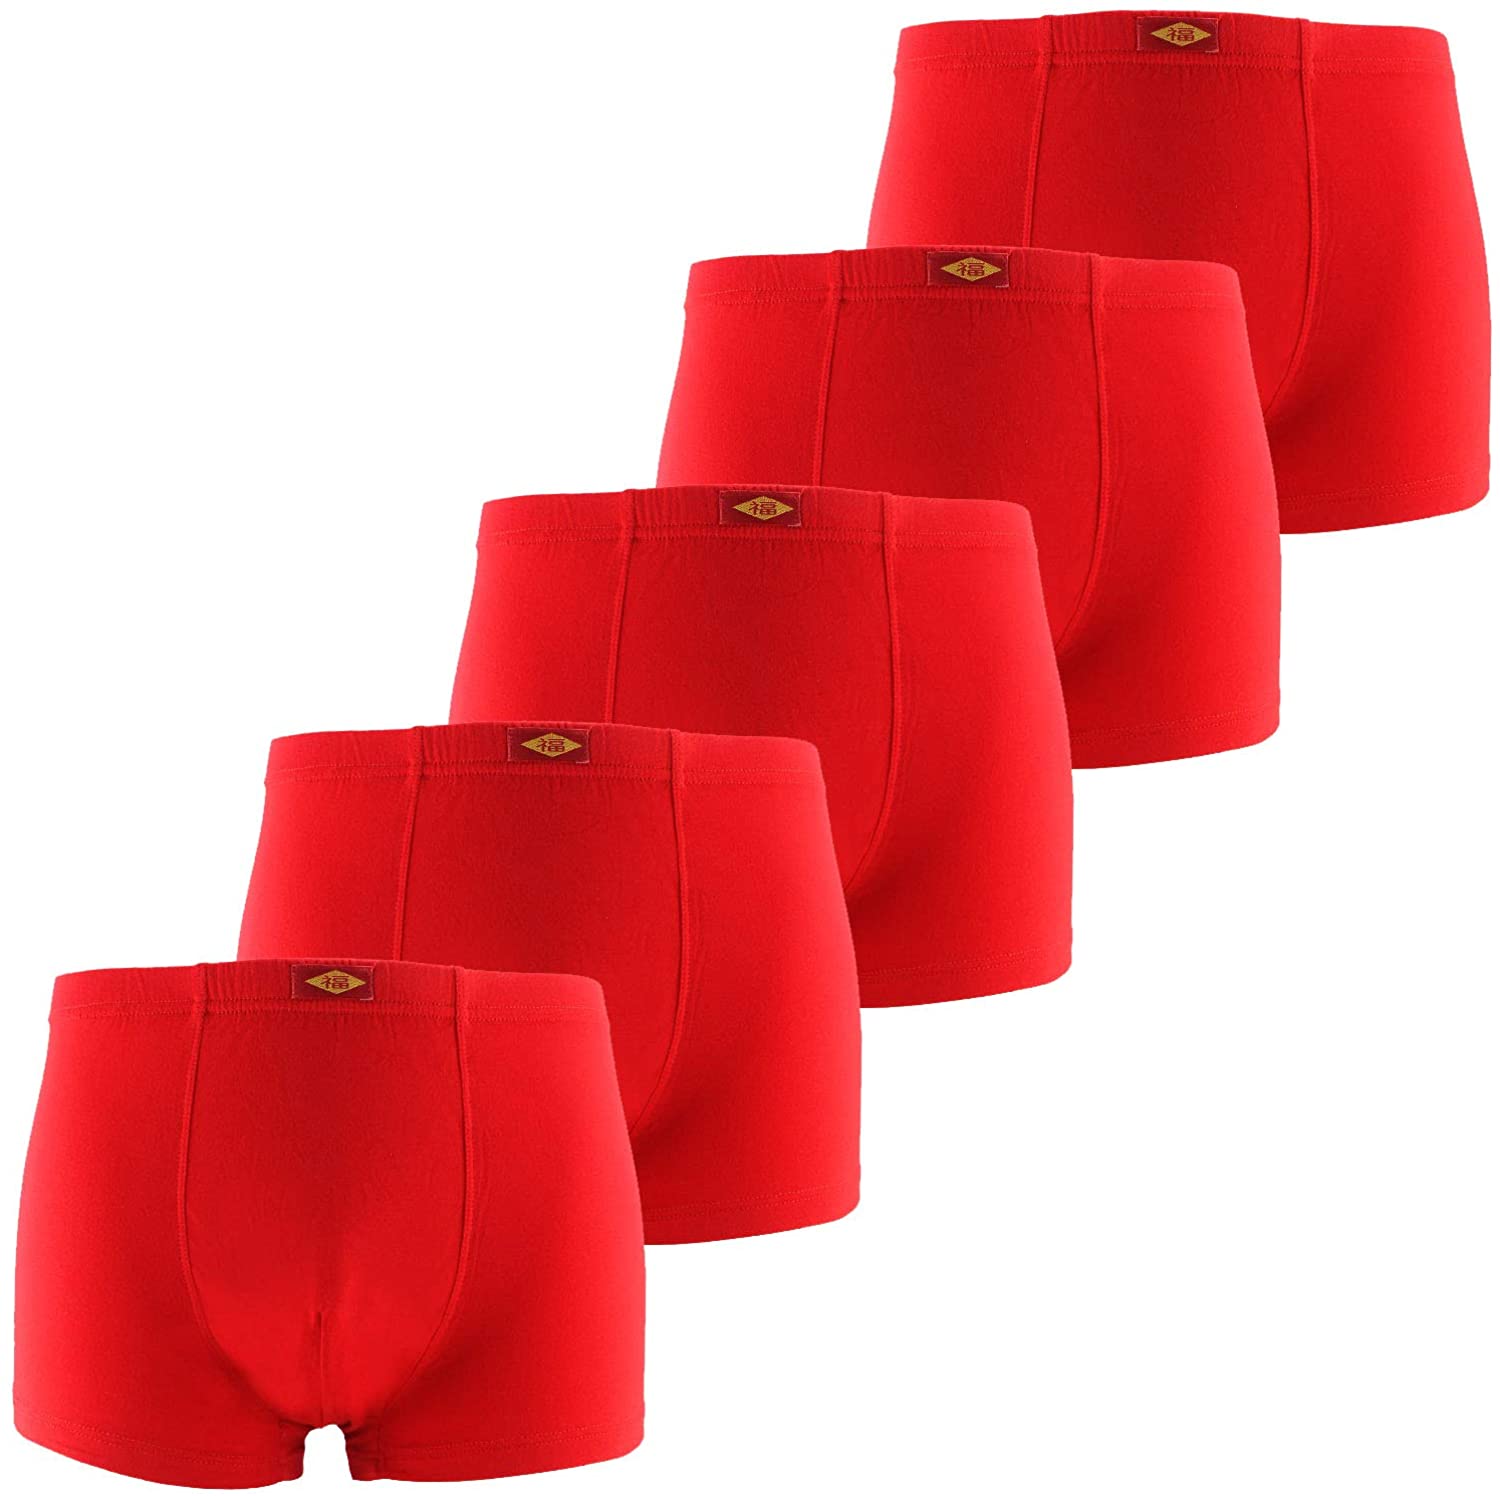 youlehe Men's Underwear Soft Bamboo Boxer Briefs Stretch Trunks Pack | eBay